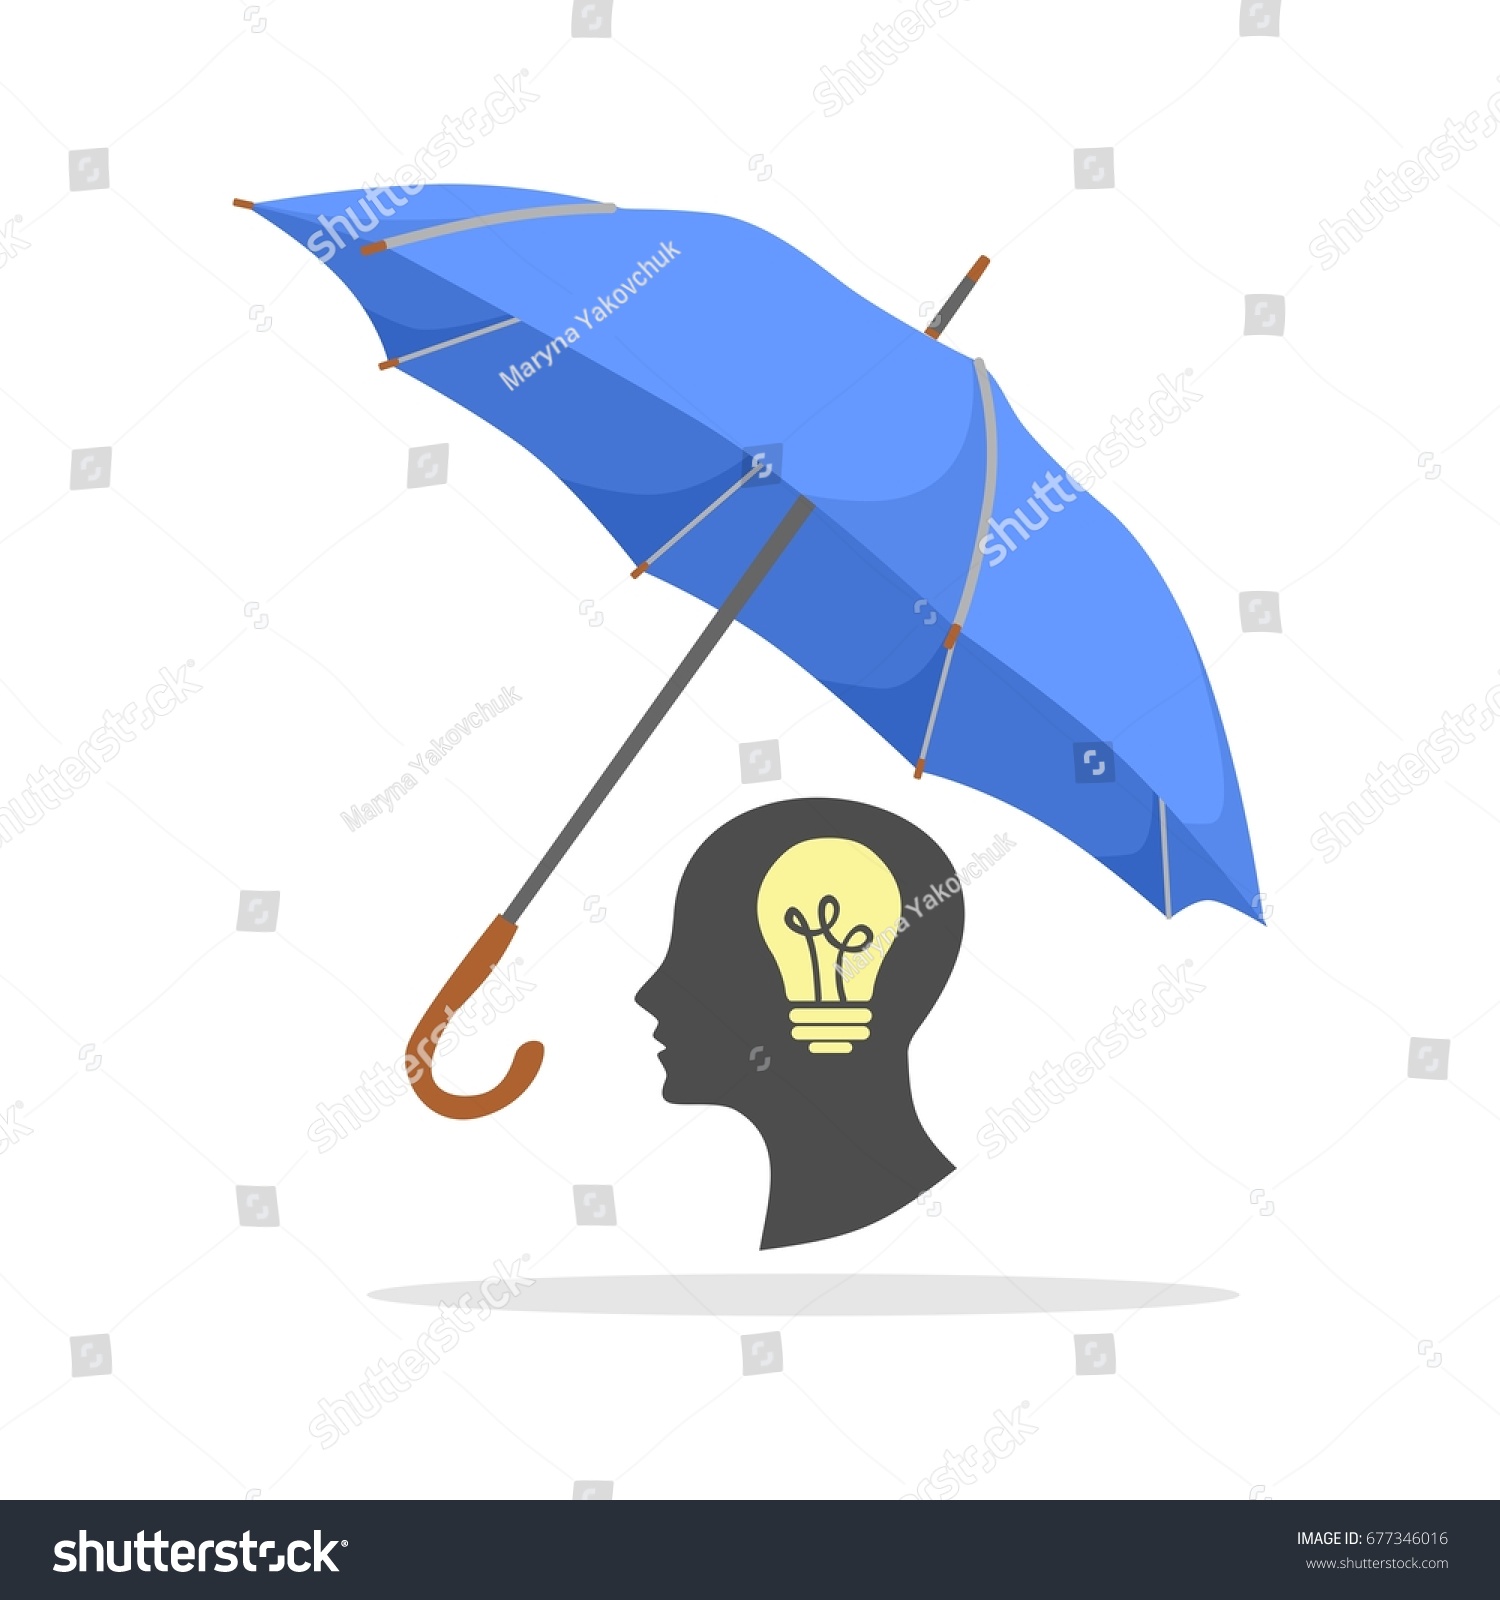 Illustration Umbrella Idea Stock Illustration 677346016 - Shutterstock